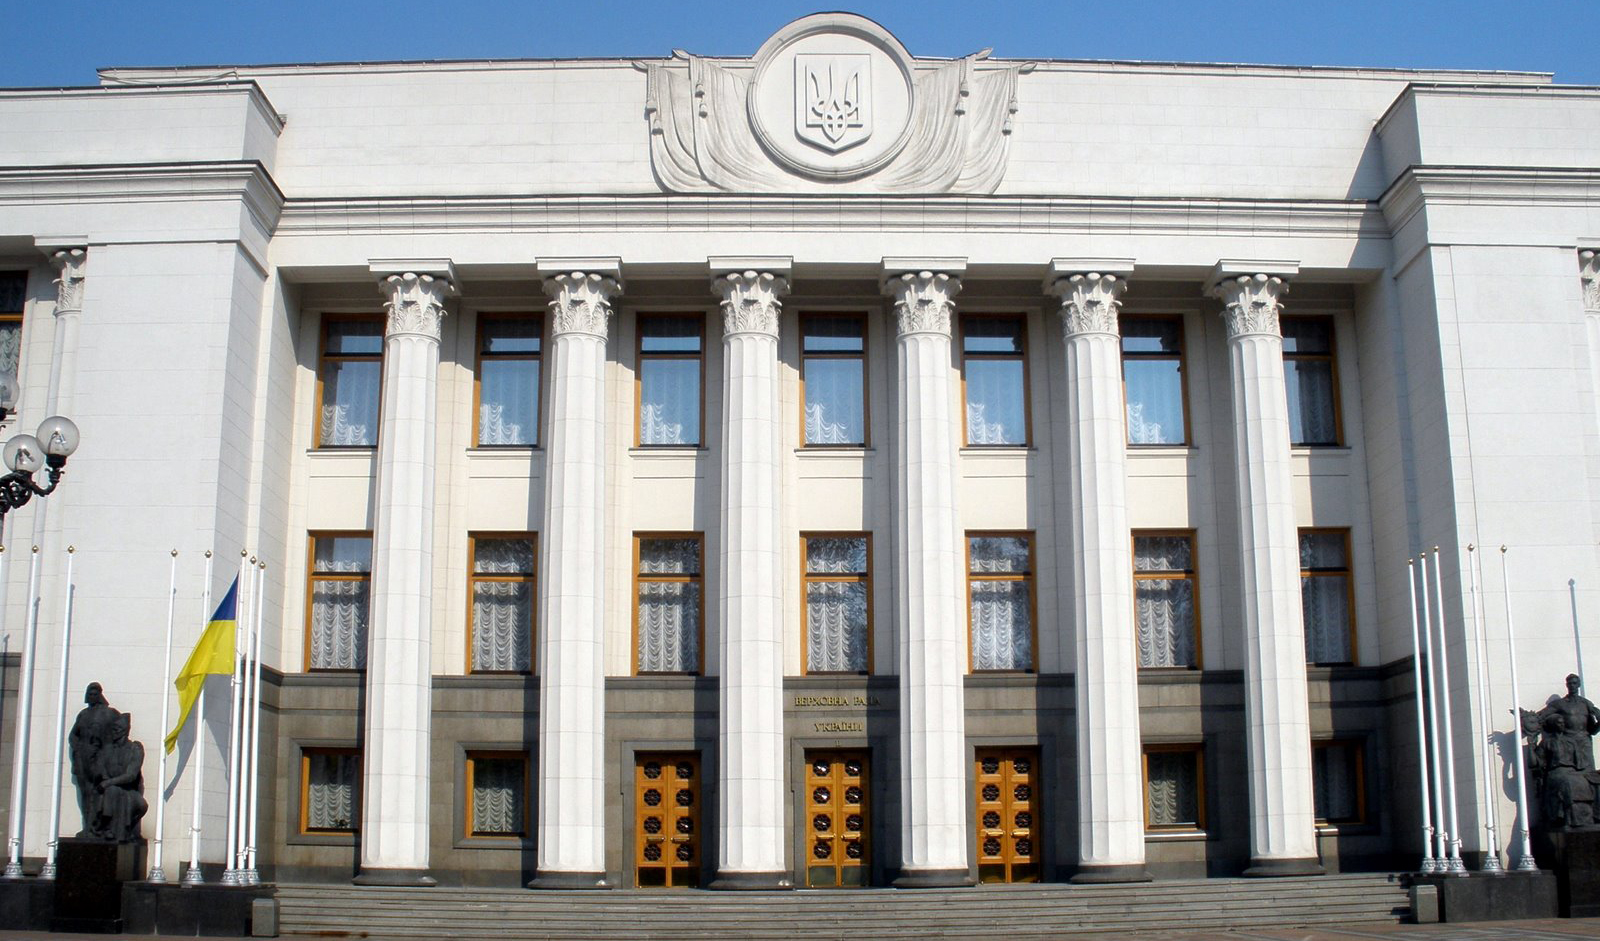 фасад будинку Верховної Ради України